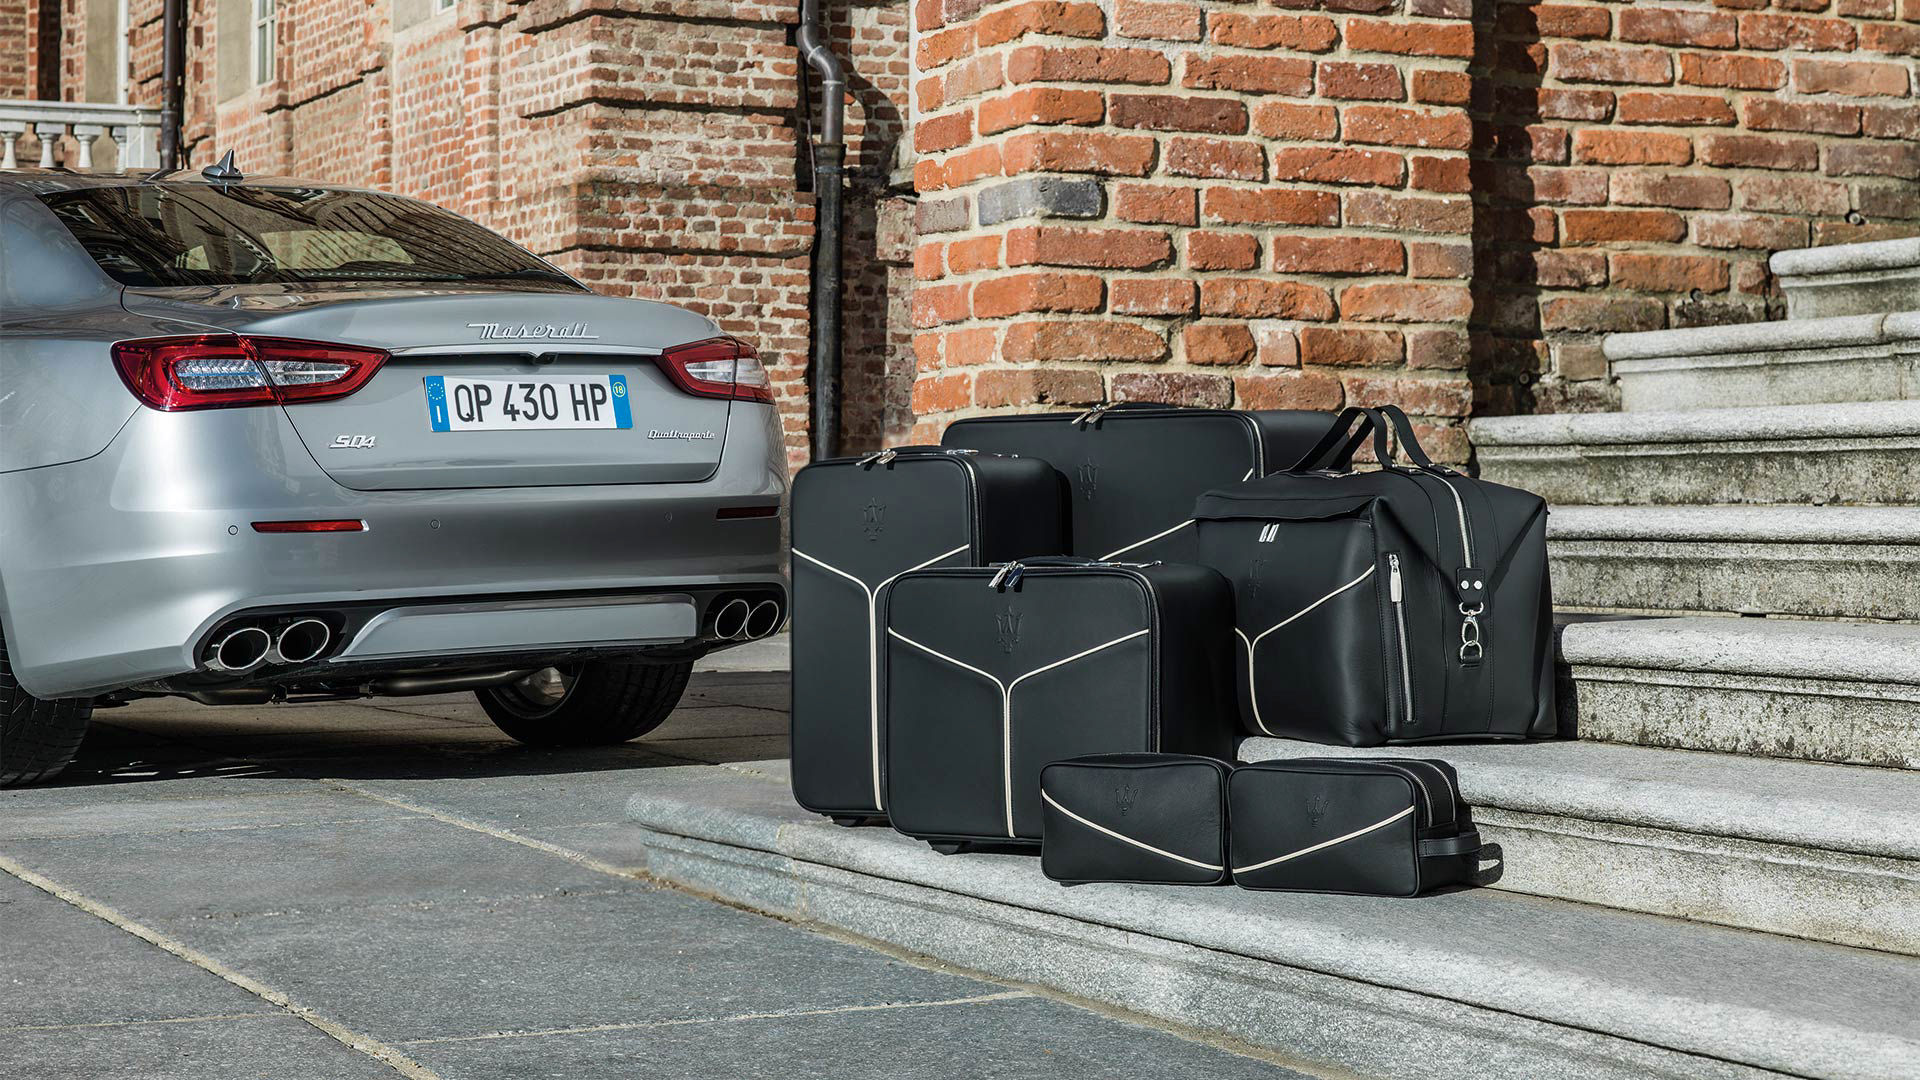 Luggage with Maserati and Maserati Quattroporte logos